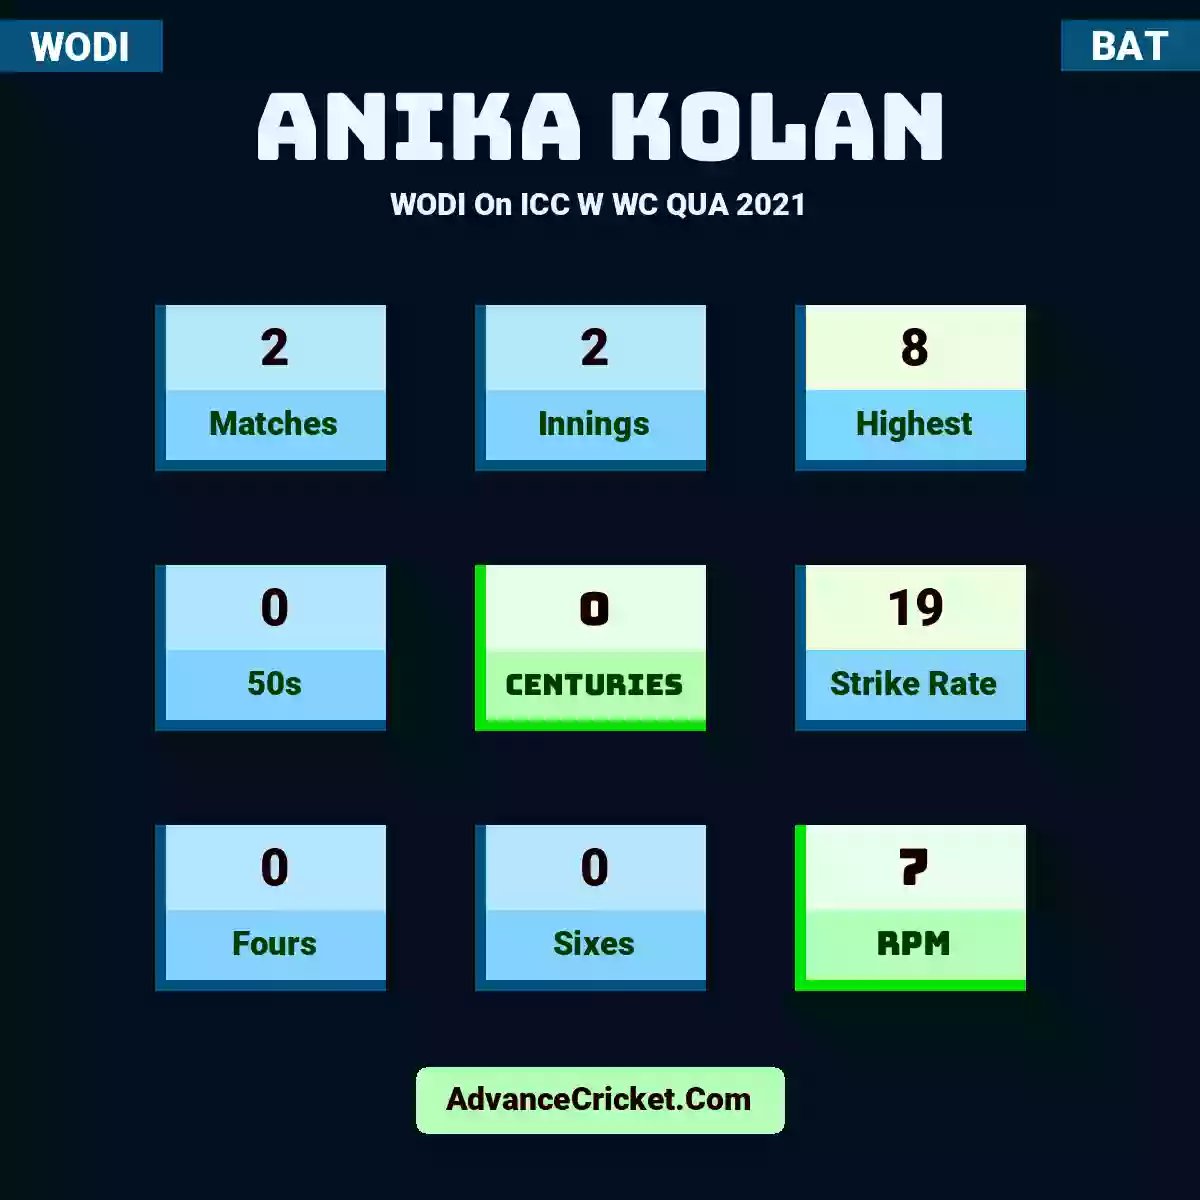 Anika Kolan WODI  On ICC W WC QUA 2021, Anika Kolan played 2 matches, scored 8 runs as highest, 0 half-centuries, and 0 centuries, with a strike rate of 19. A.Kolan hit 0 fours and 0 sixes, with an RPM of 7.